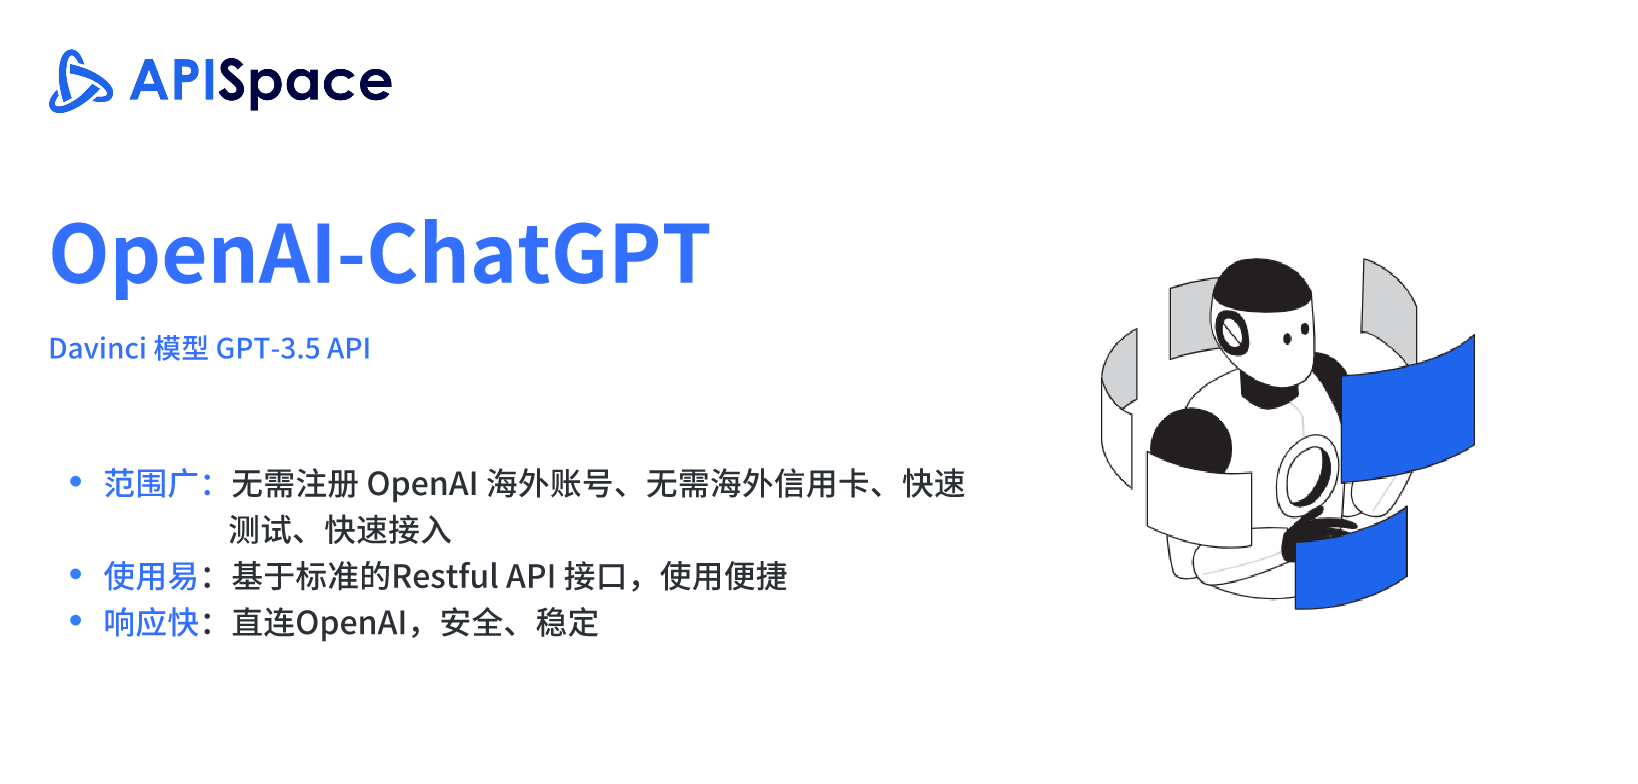 GPT-3.5 还没捂热，GPT-4 要来了？